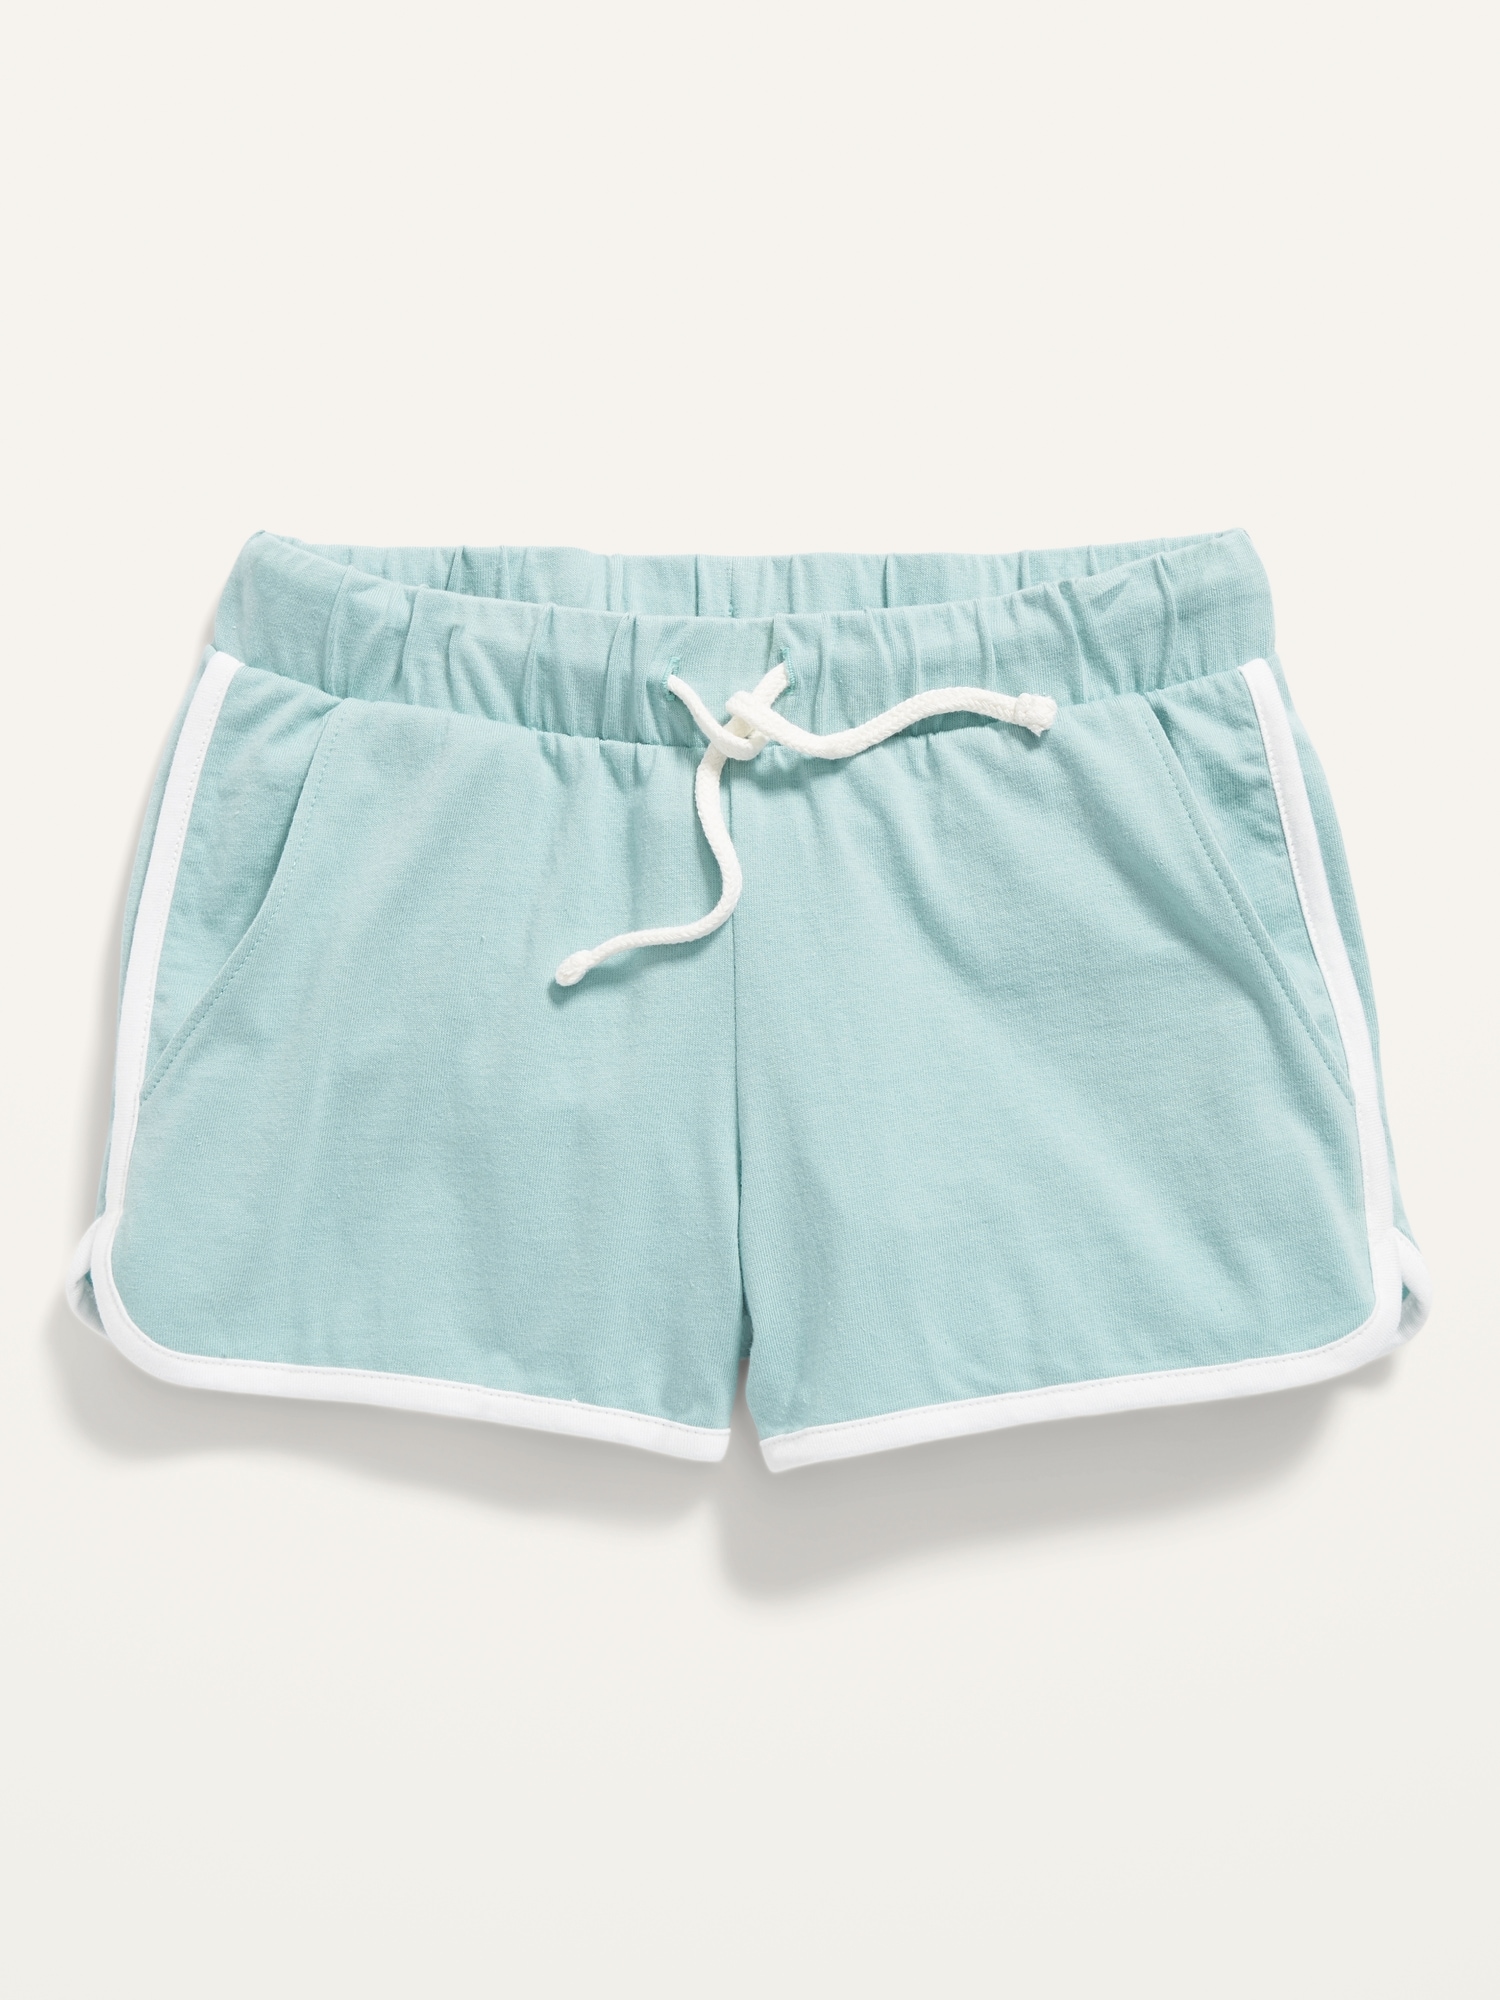 Solid Drawstring Shorts for Girls